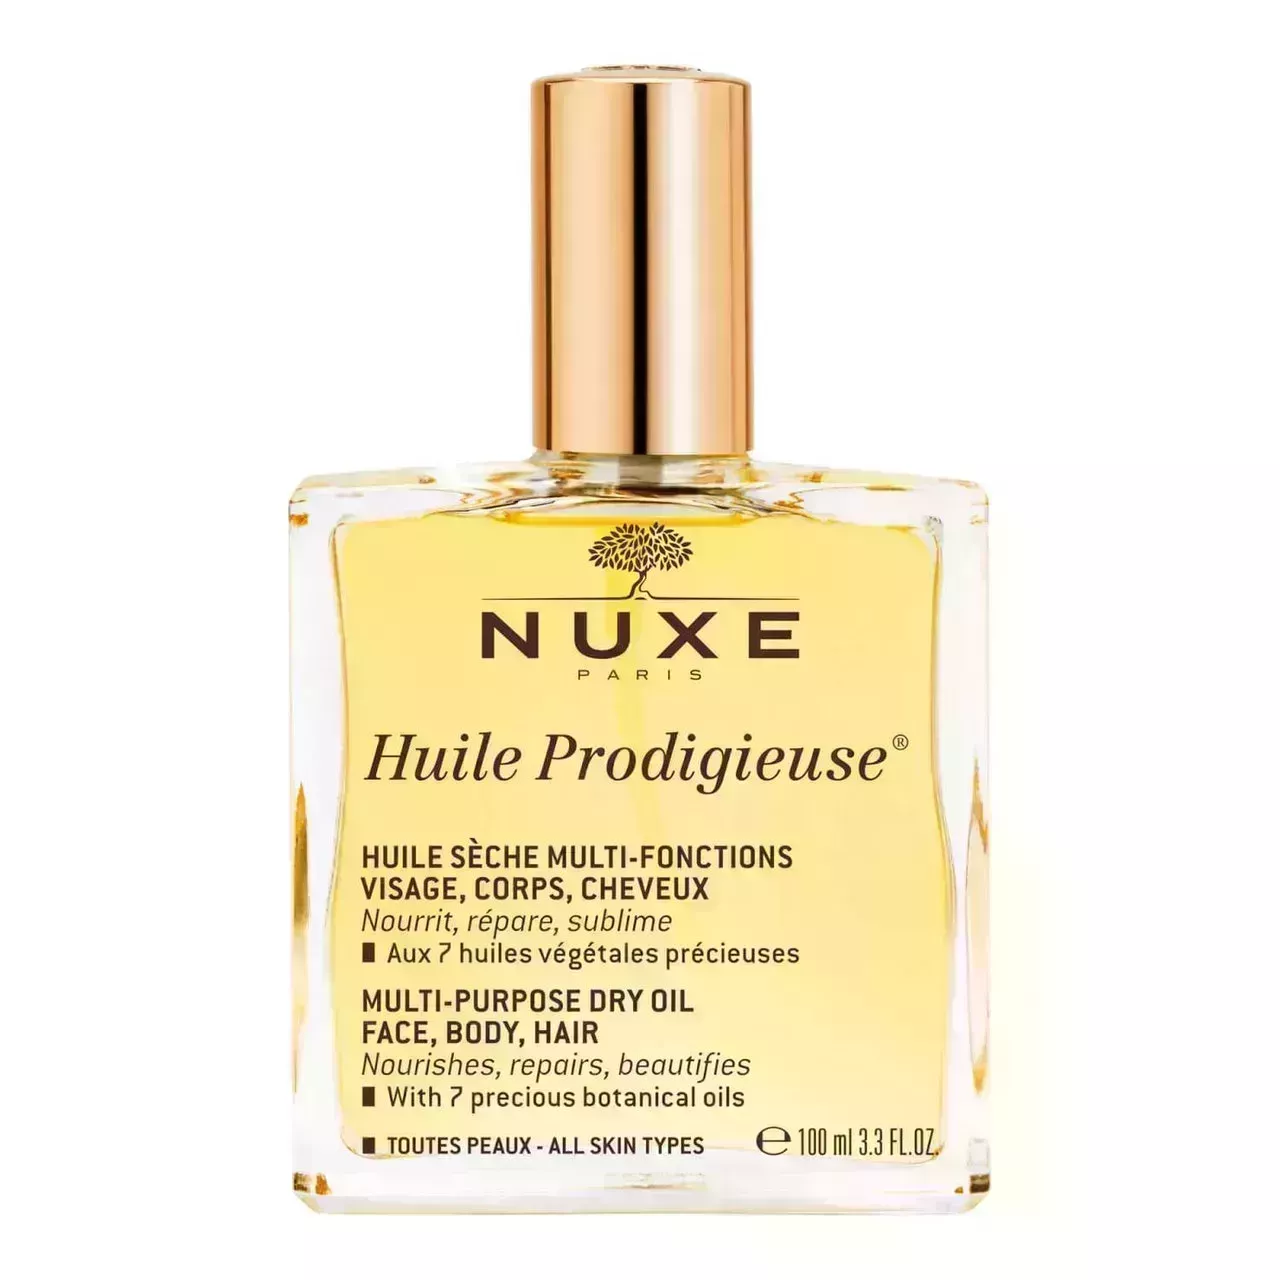 Nuxe Huile Prodigieuse Multi-Purpose Dry Oil on white background